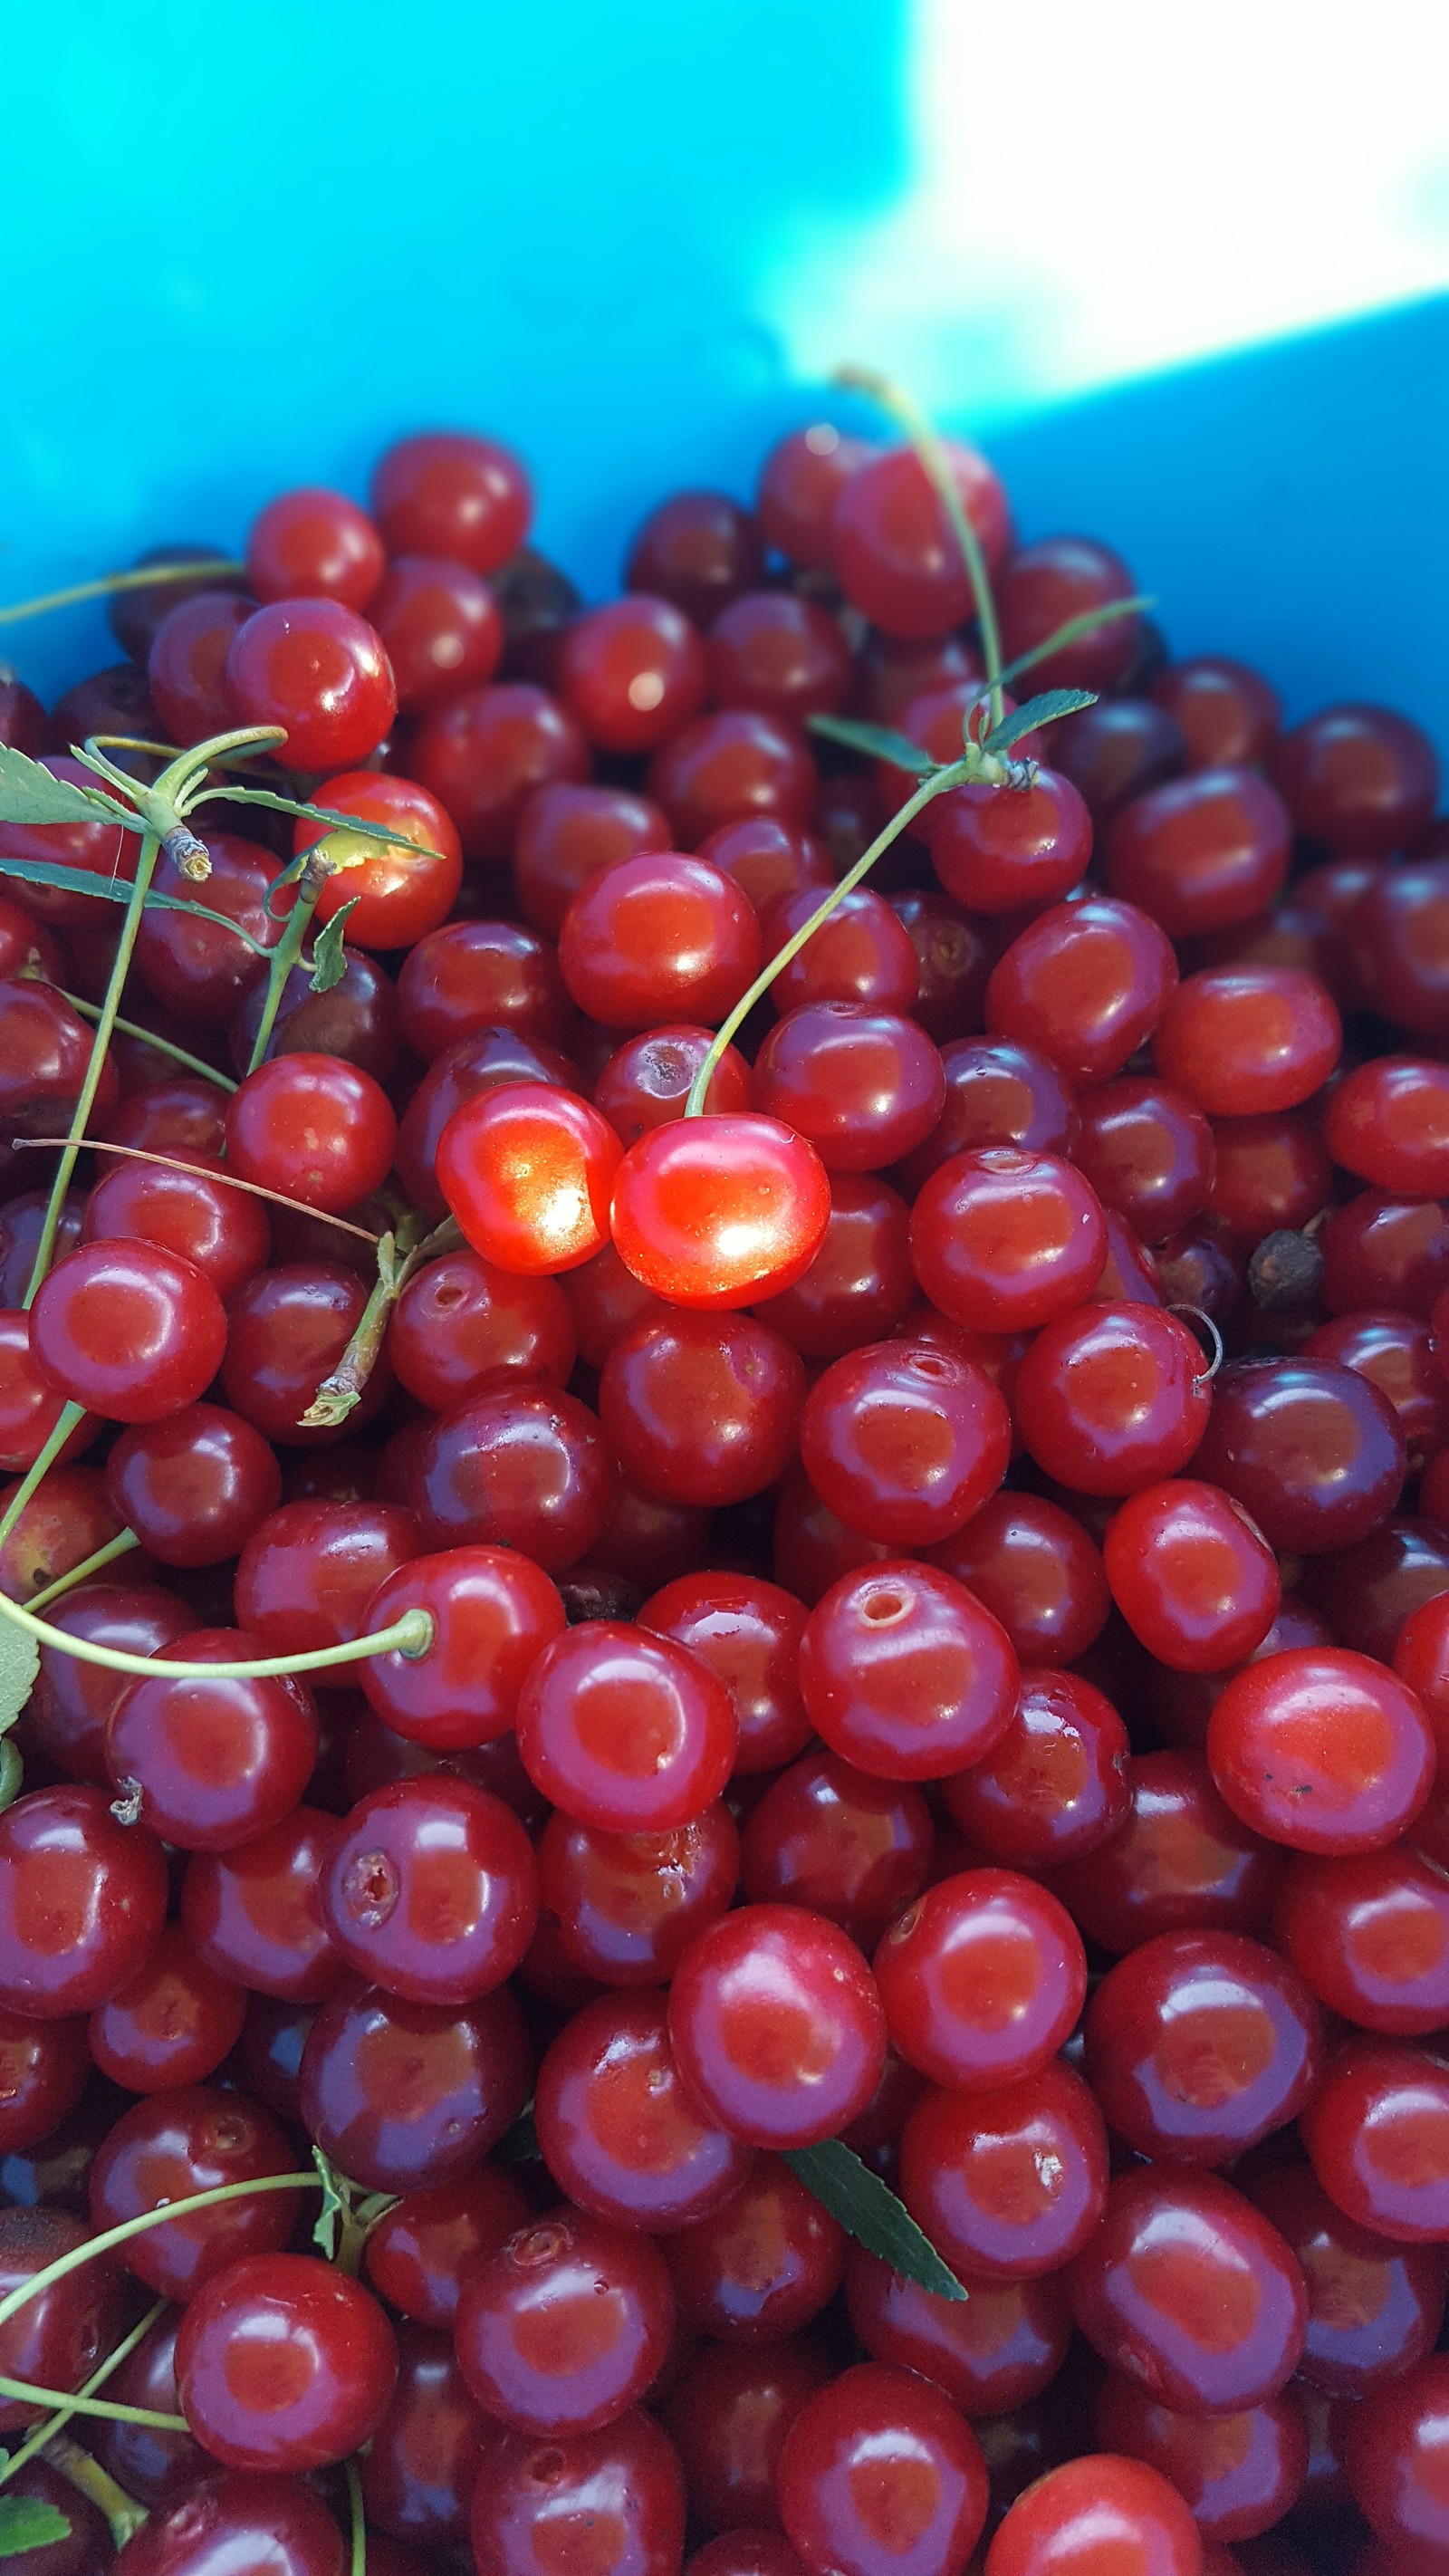 Just berries. - My, Berries, Harvest, Samsung Galaxy S6, The photo, Cherry, Raspberries, Juneberry, Longpost